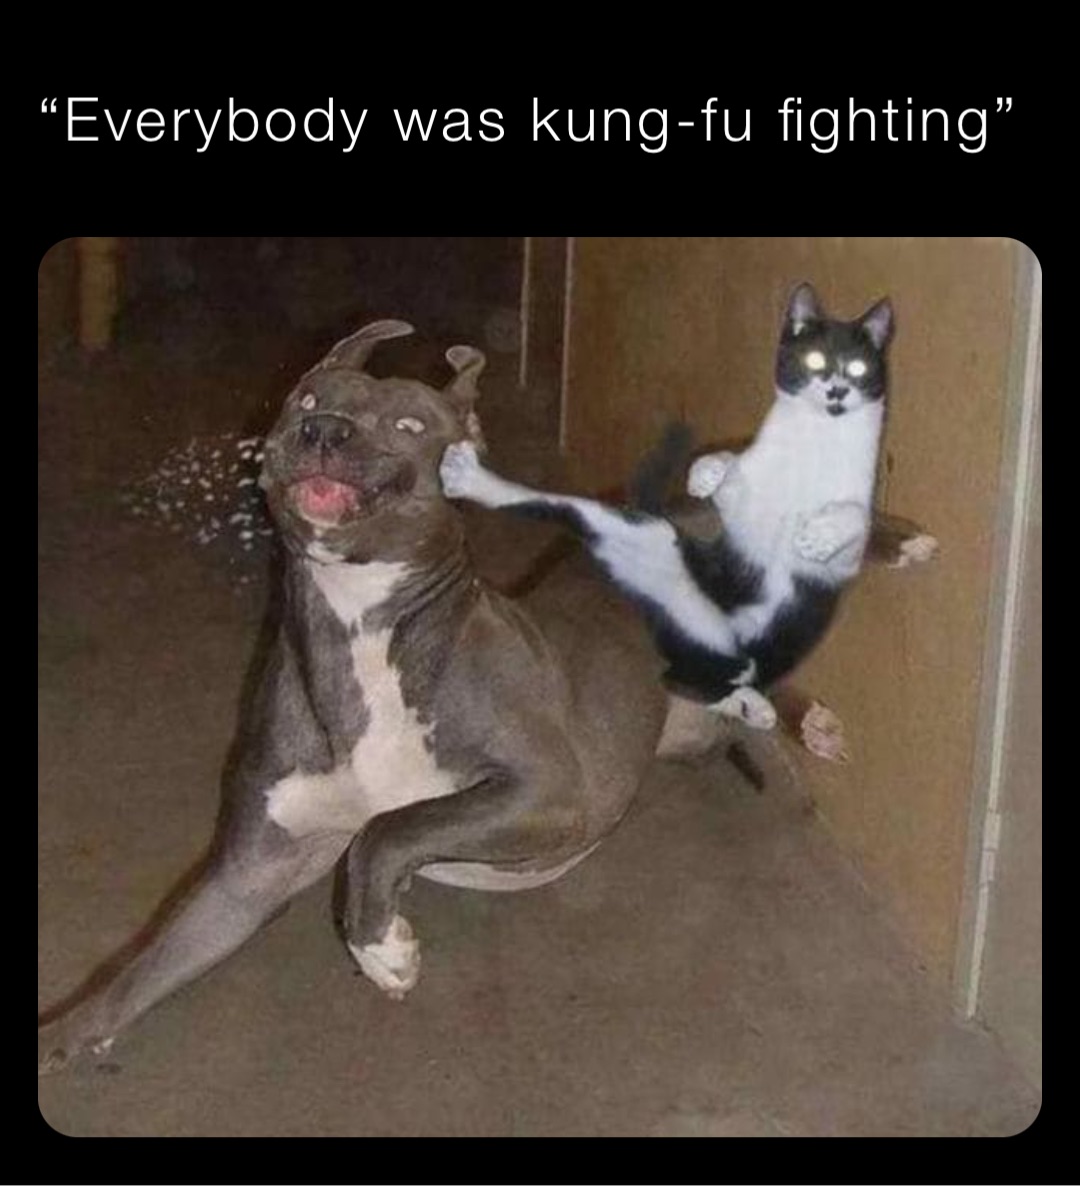 “Everybody was kung-fu fighting”